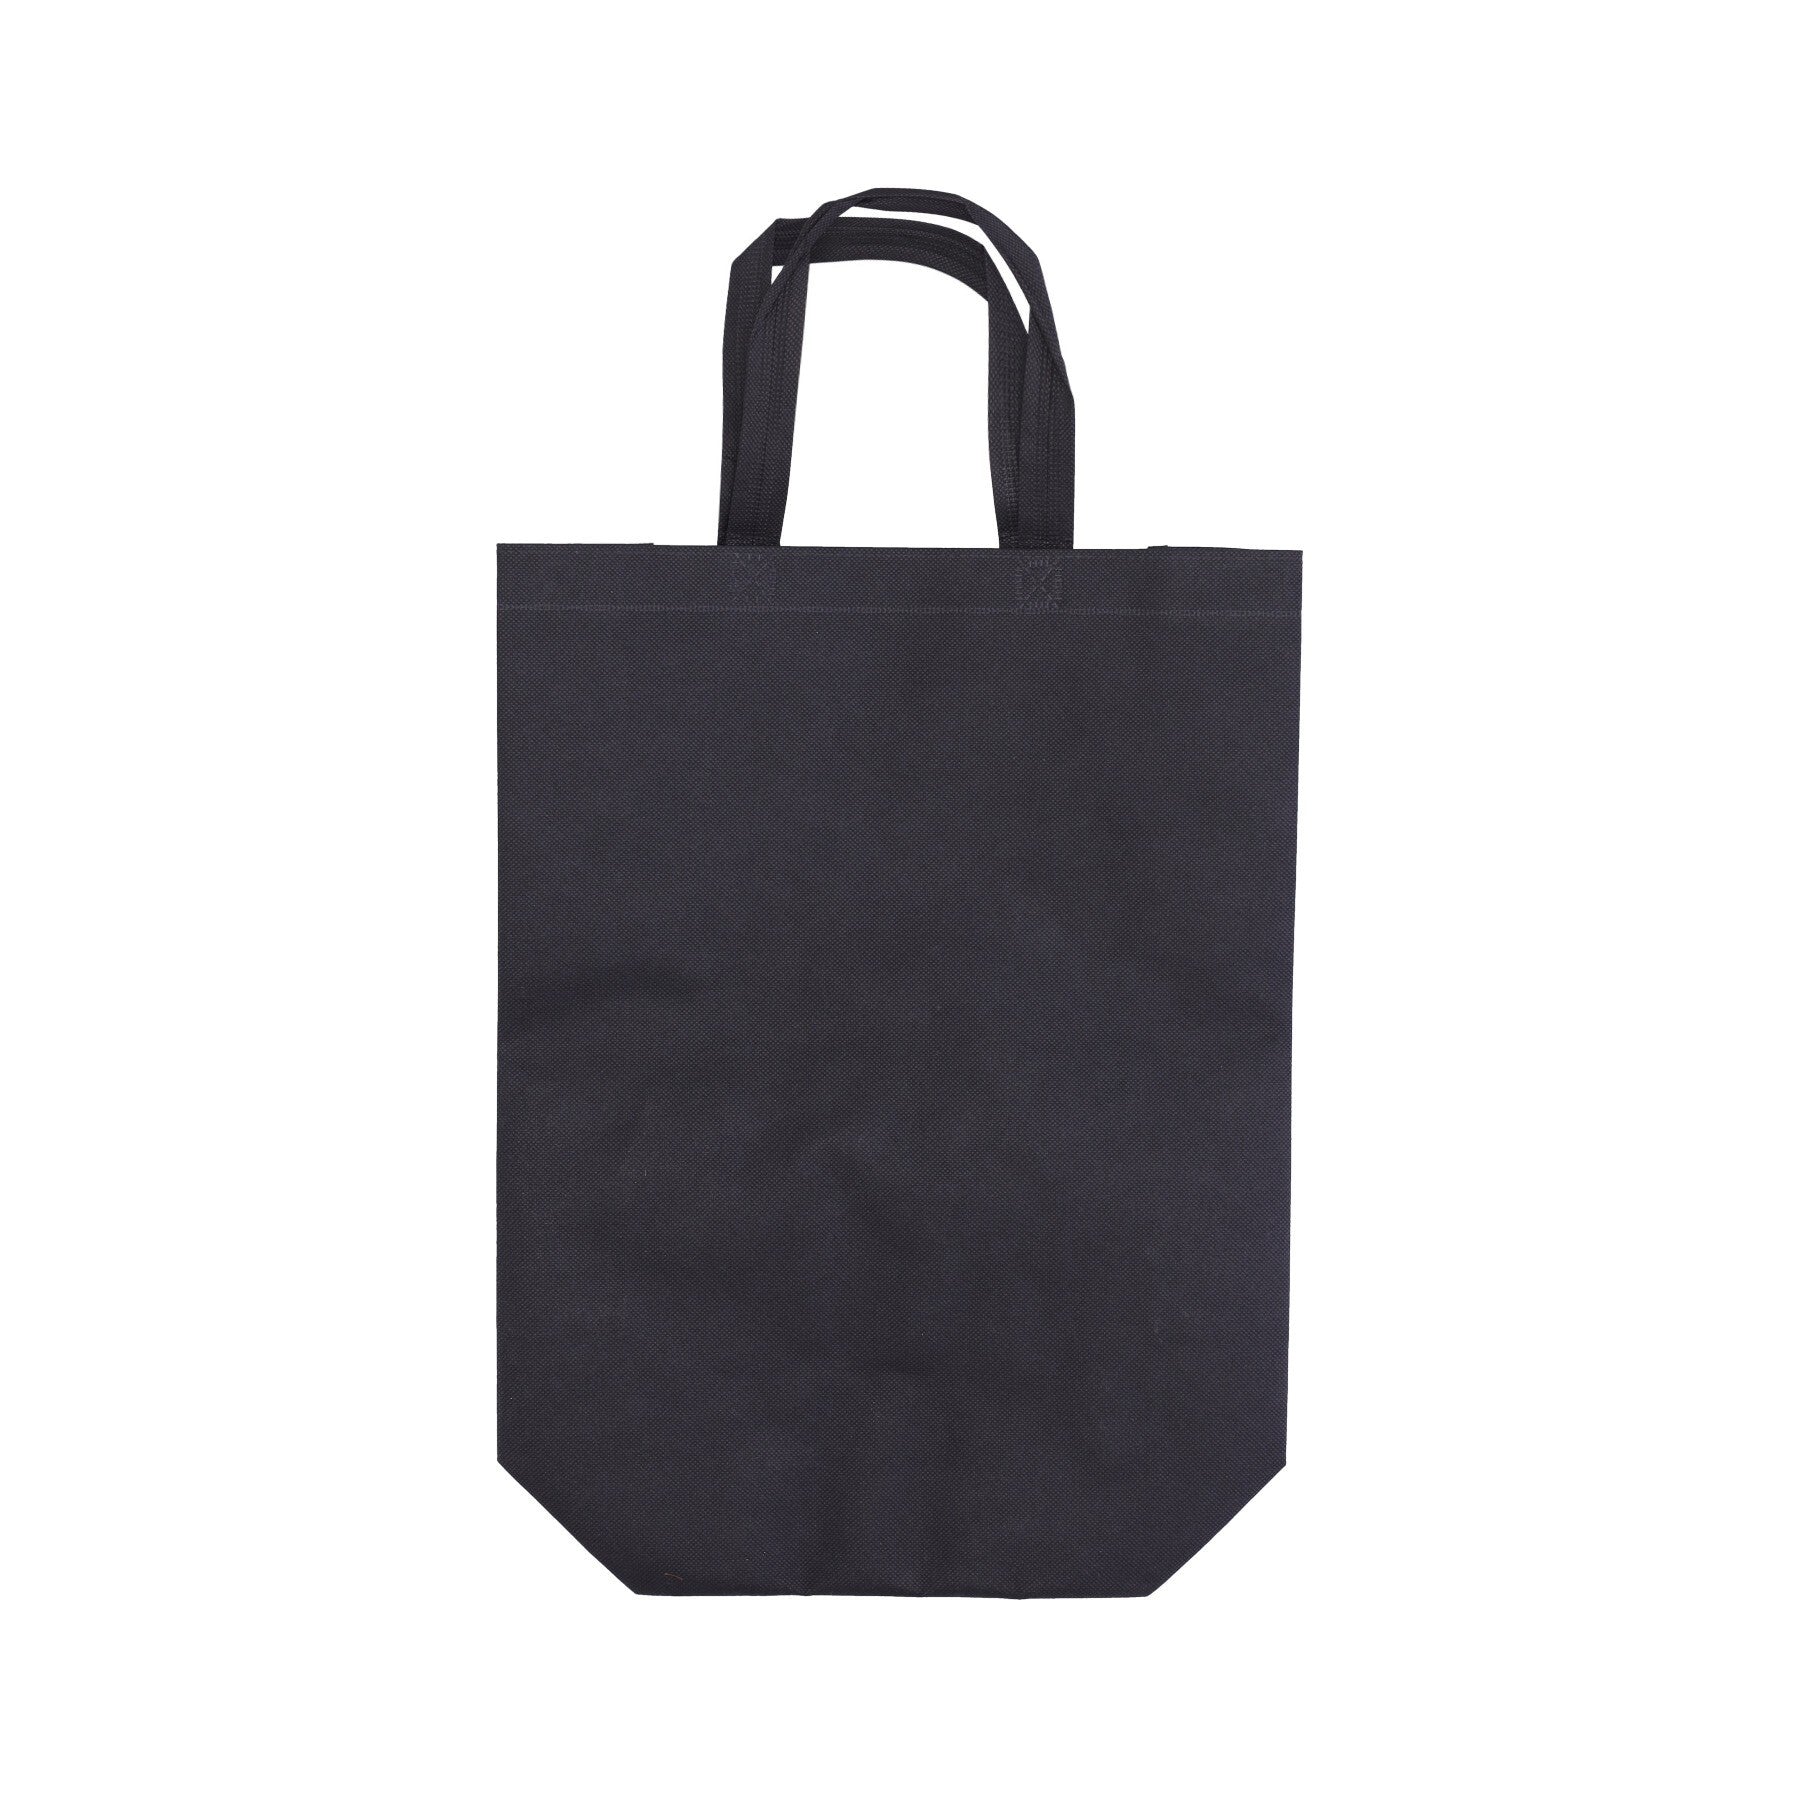 The Playoffs Logo Tote Bag Men's Bag